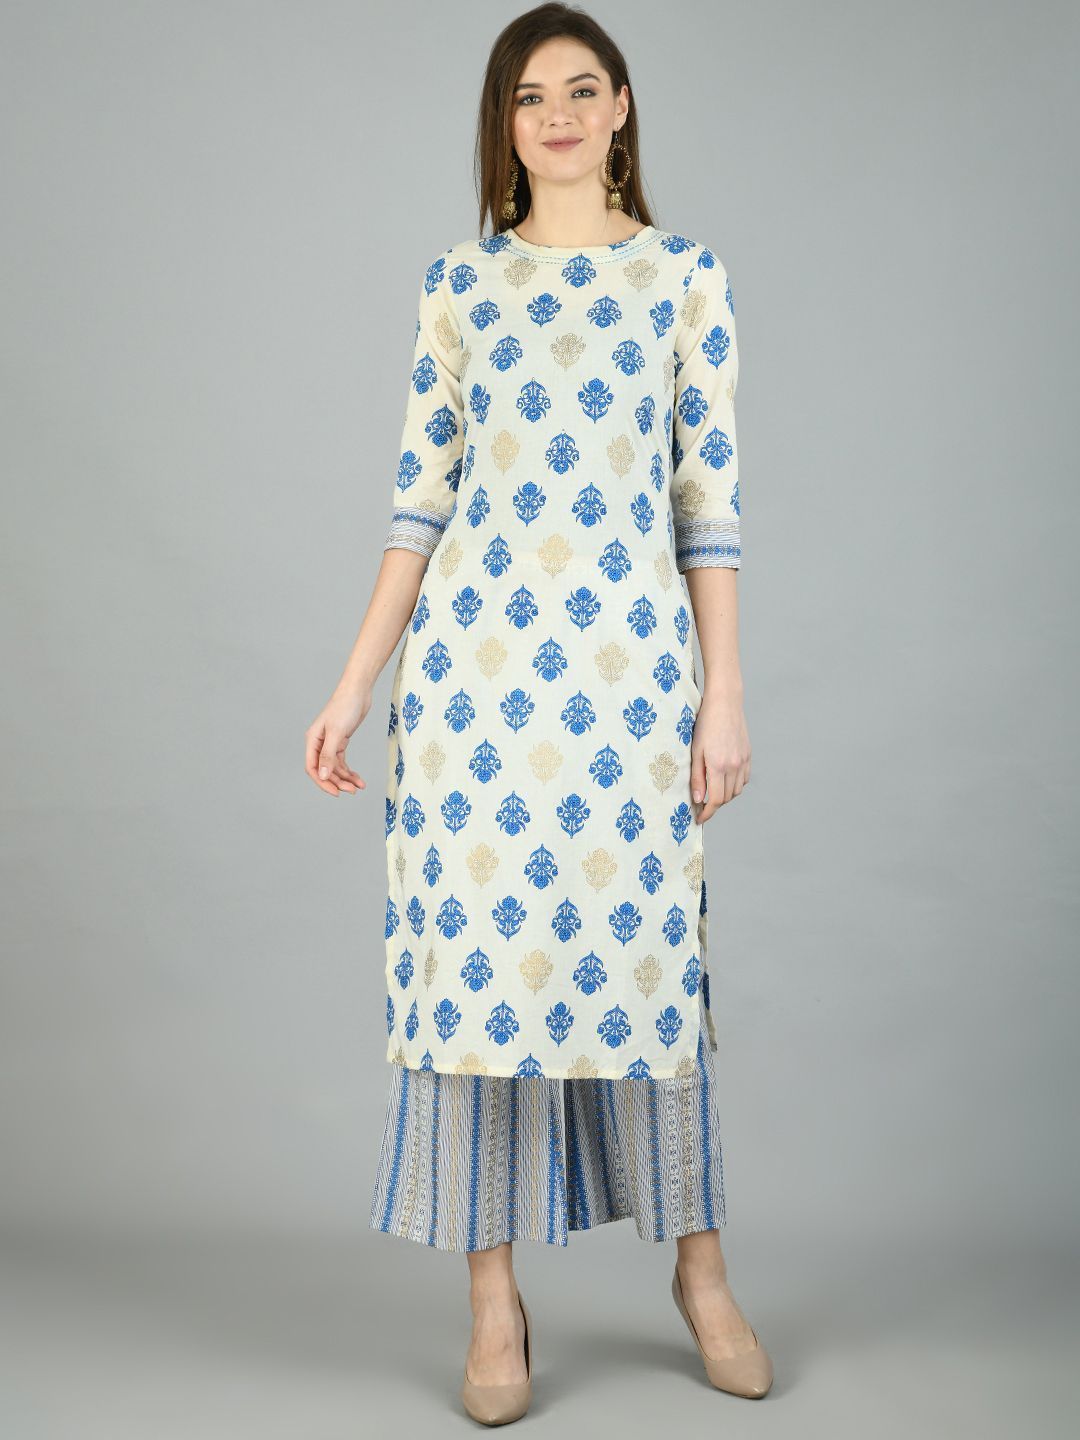 Women's Multi Cotton Printed 3/4 Sleeve Round Neck Casual Kurta Palazzo Set - Myshka